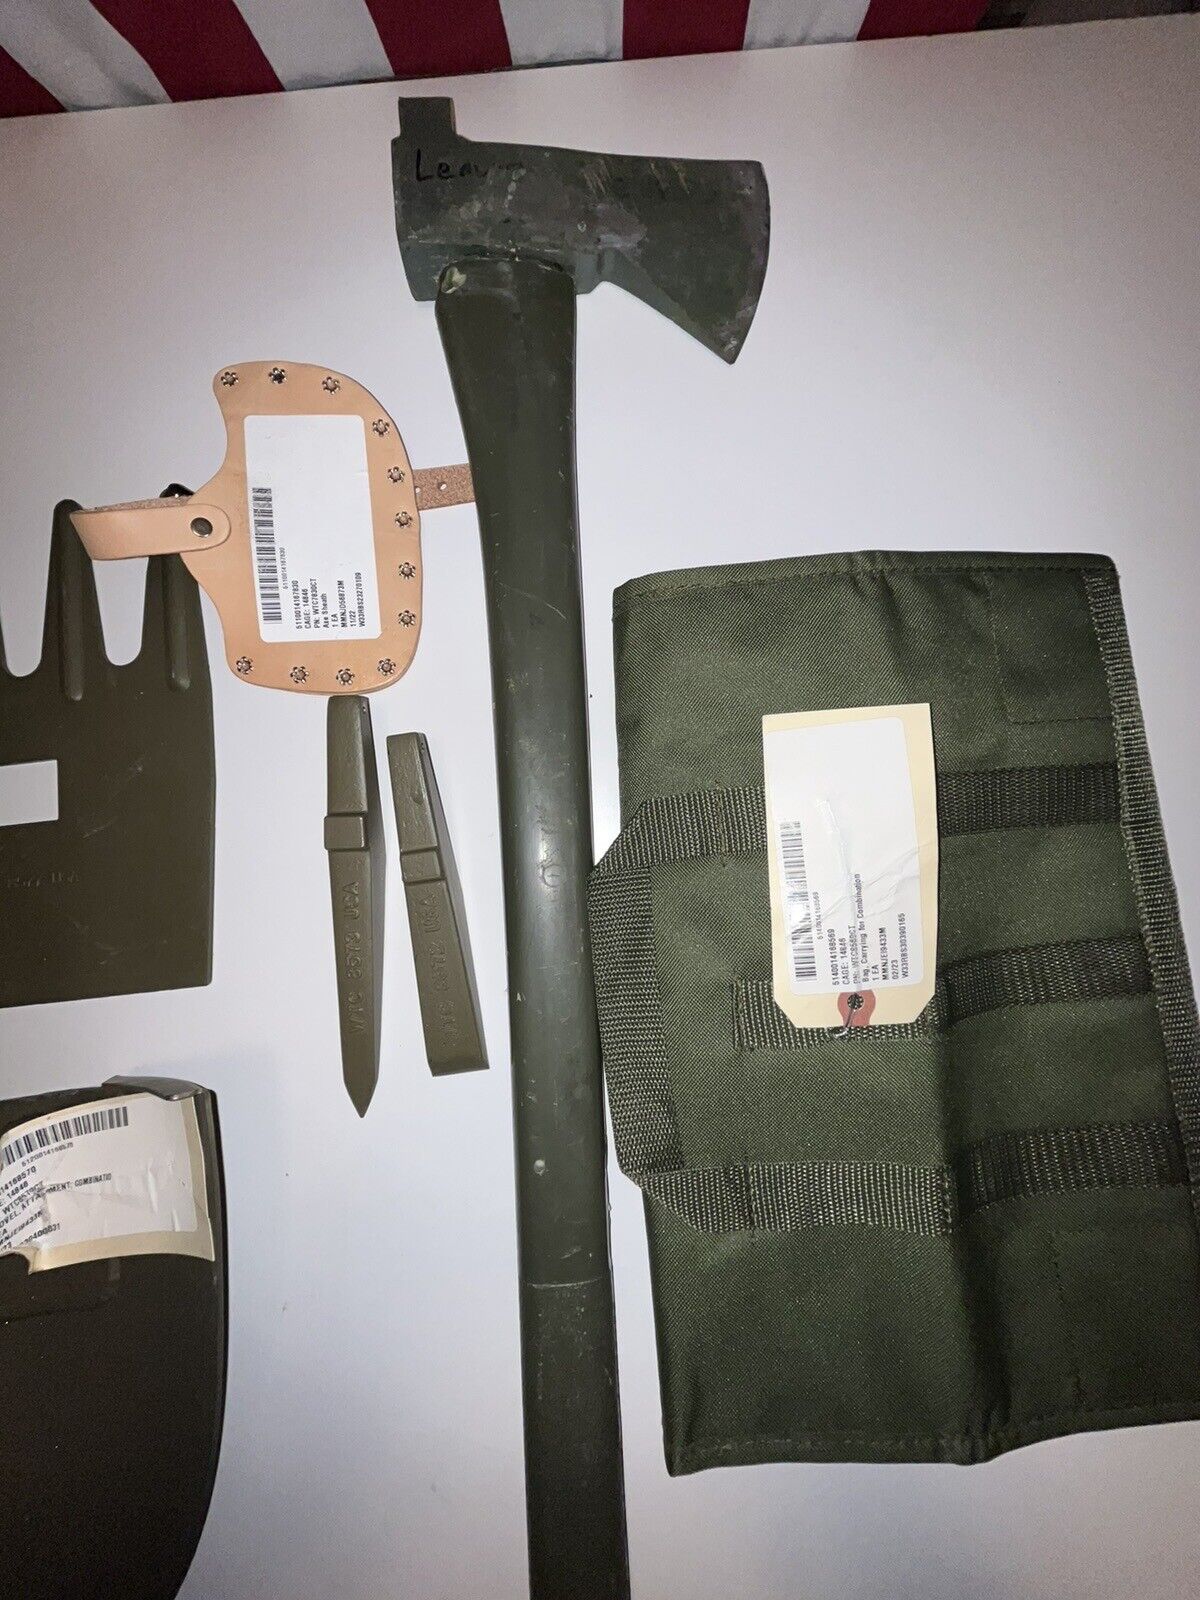 USGI Forrest Tool Co MAX Military Axe Tool W/ Shovel, Picks, and Rake Hoe Attach